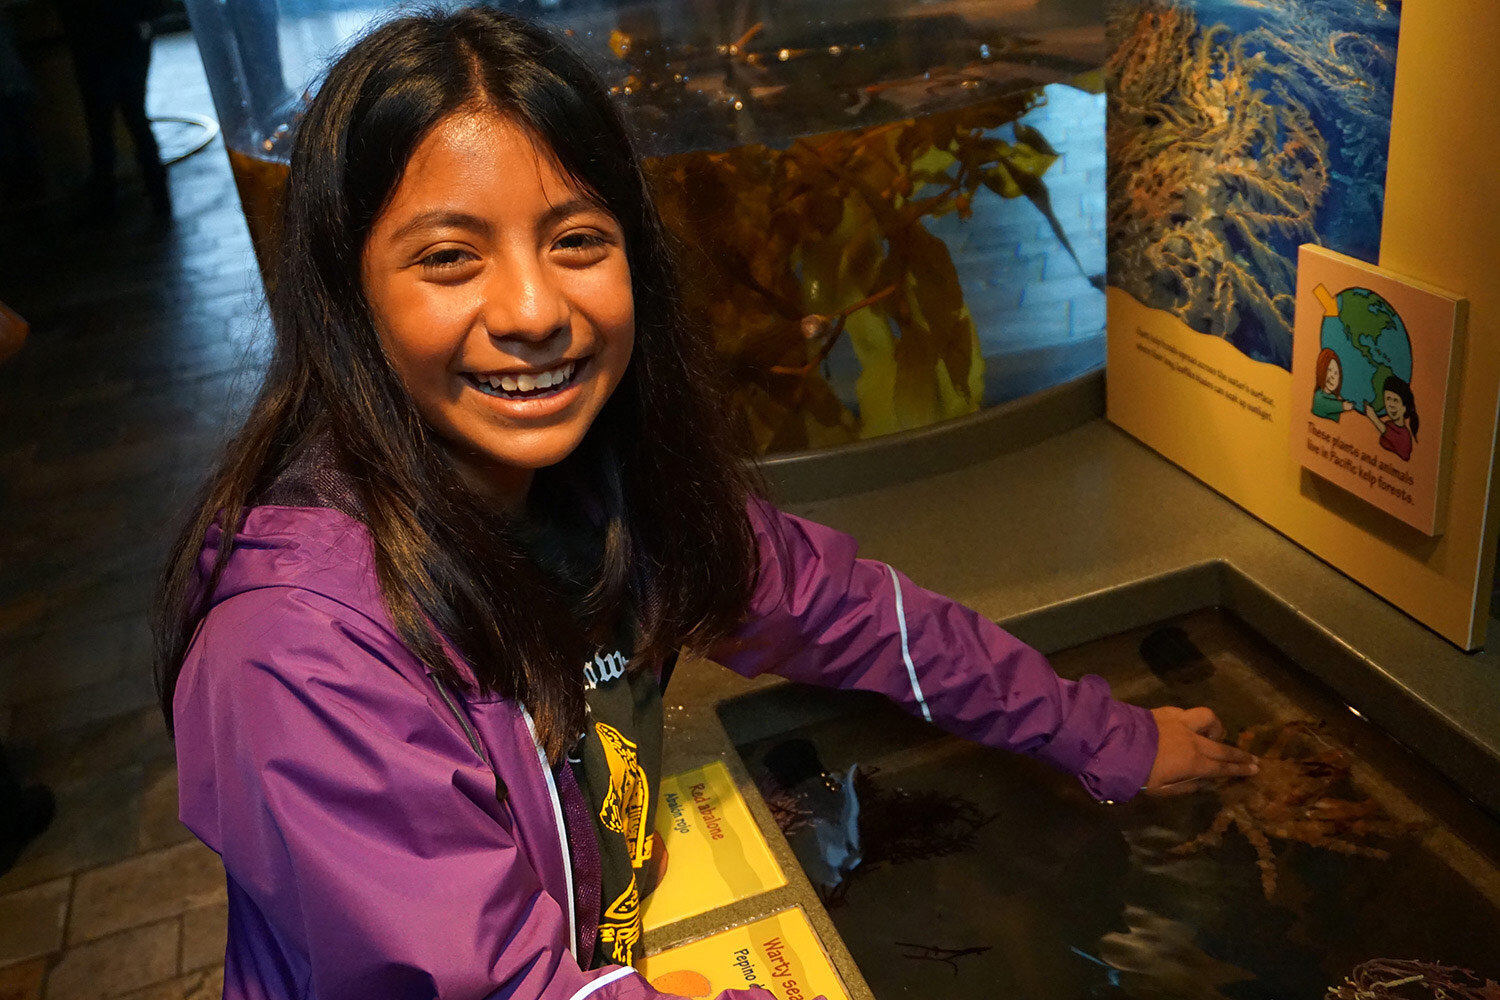  Karen touches a crab at the Monterey Bay Aquarium 